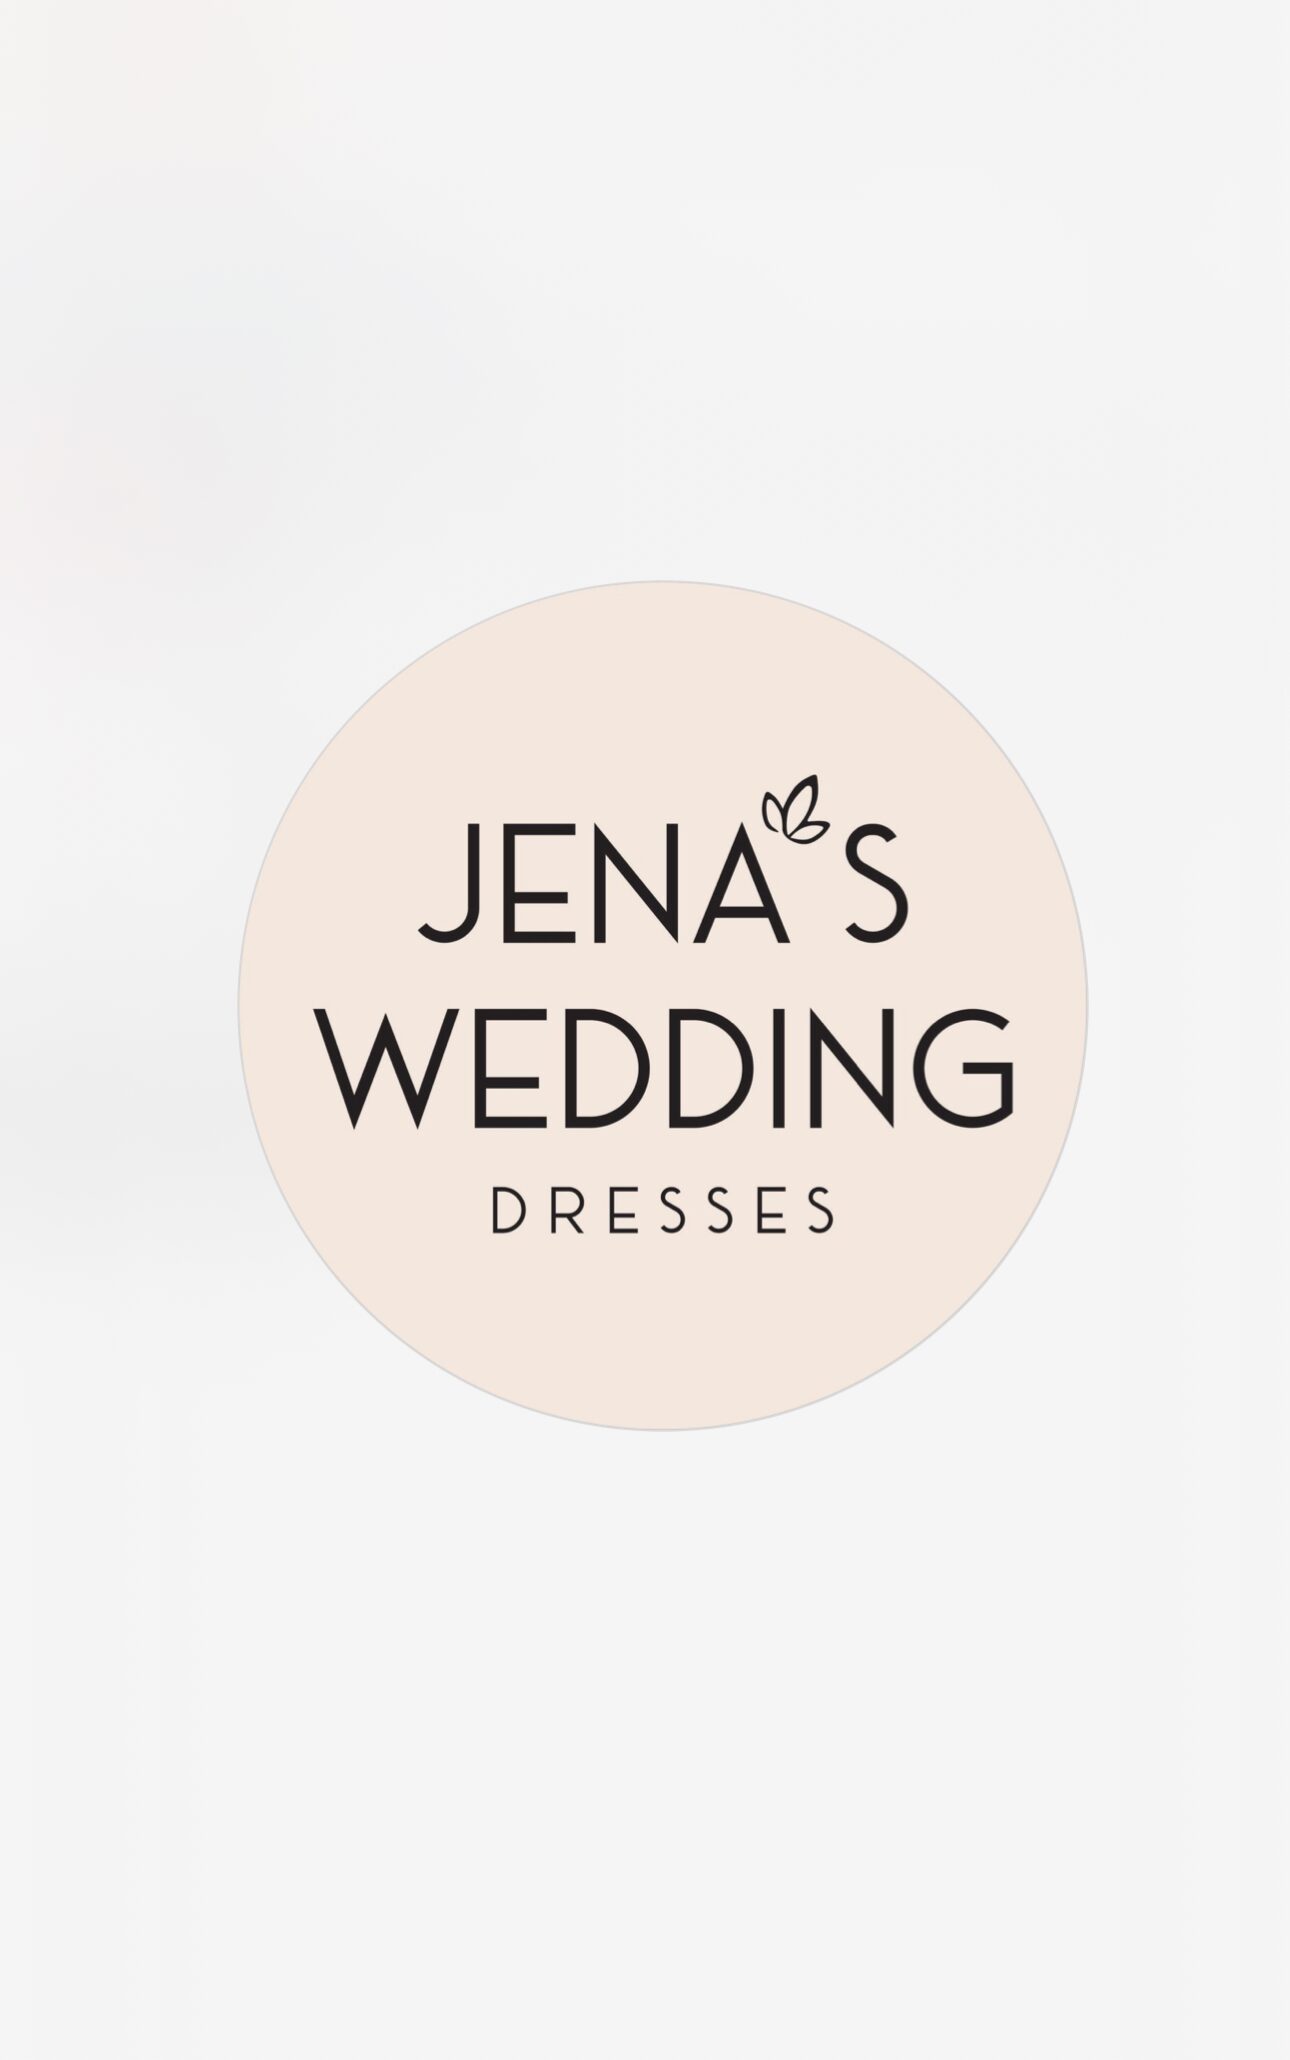 Jenas Wedding